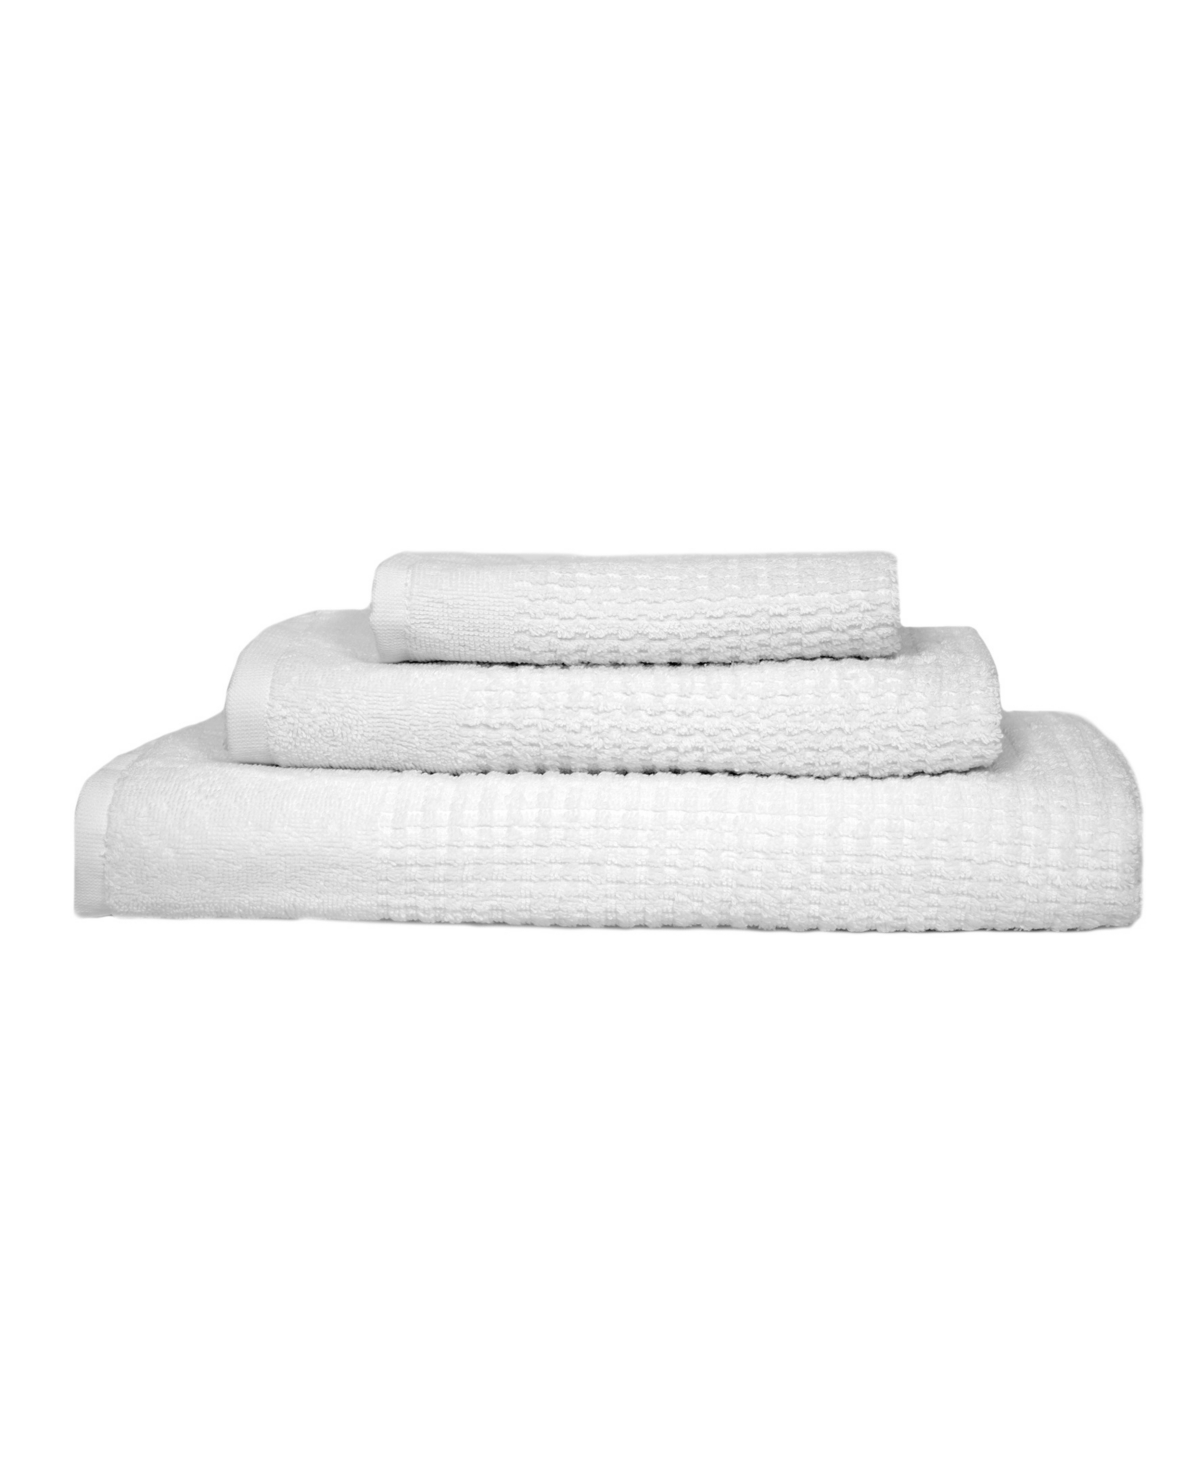 Ozan Premium Home Sorano Collection 3 Piece Turkish Cotton Luxury Towel Set Bedding In White